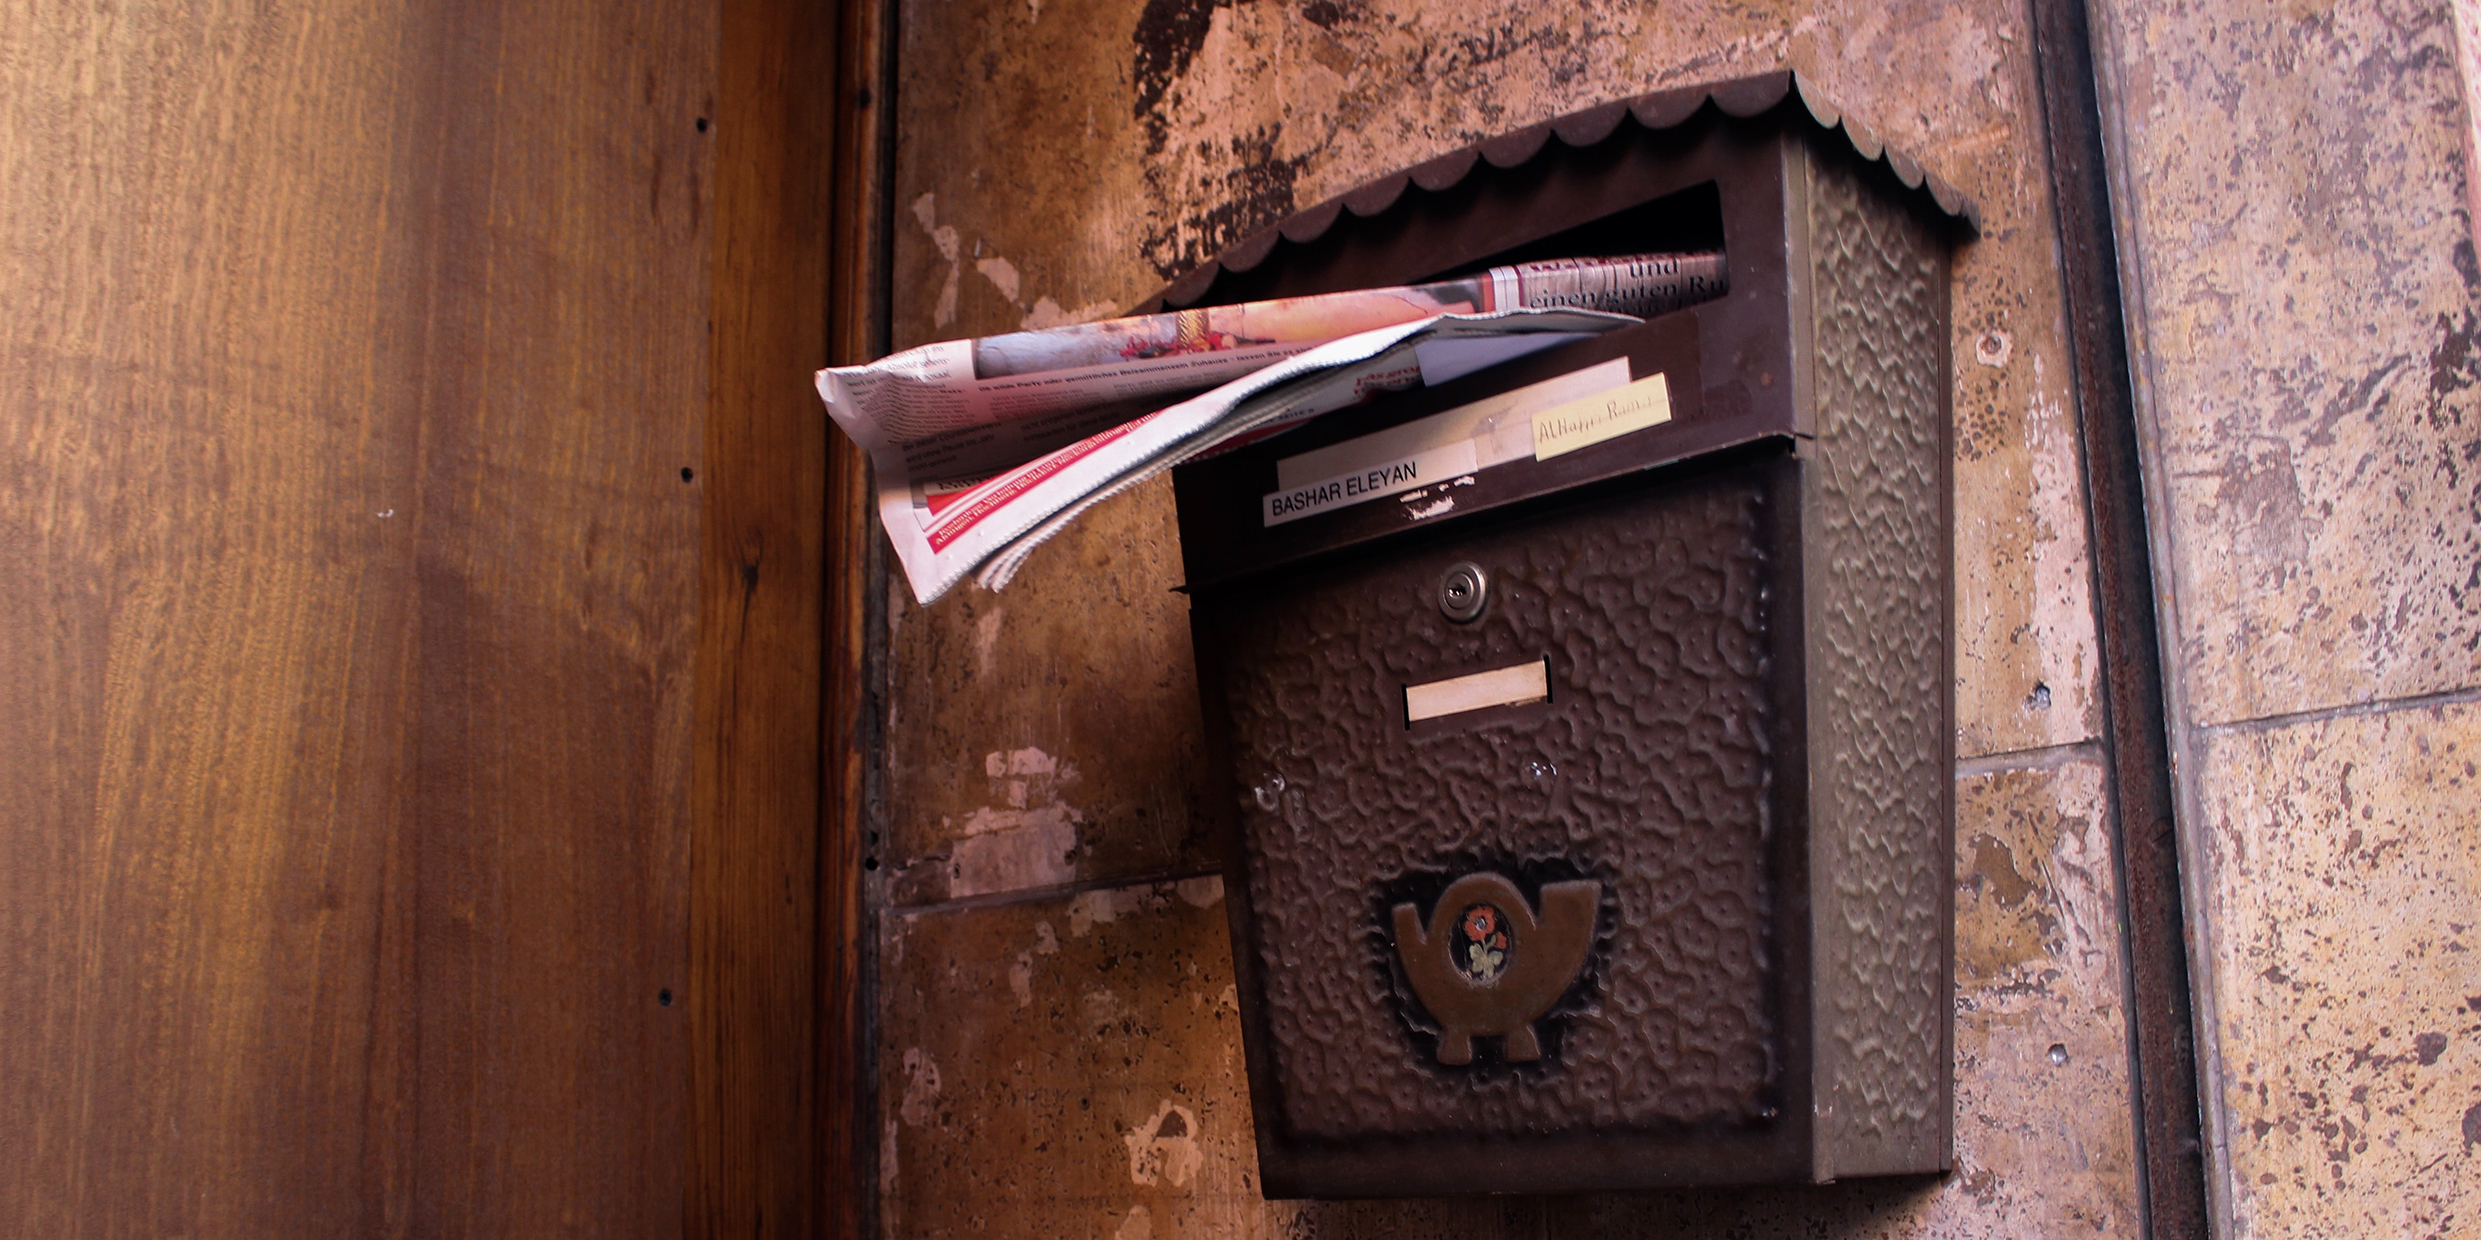 Image of junk mail stuffed into mailbox slot